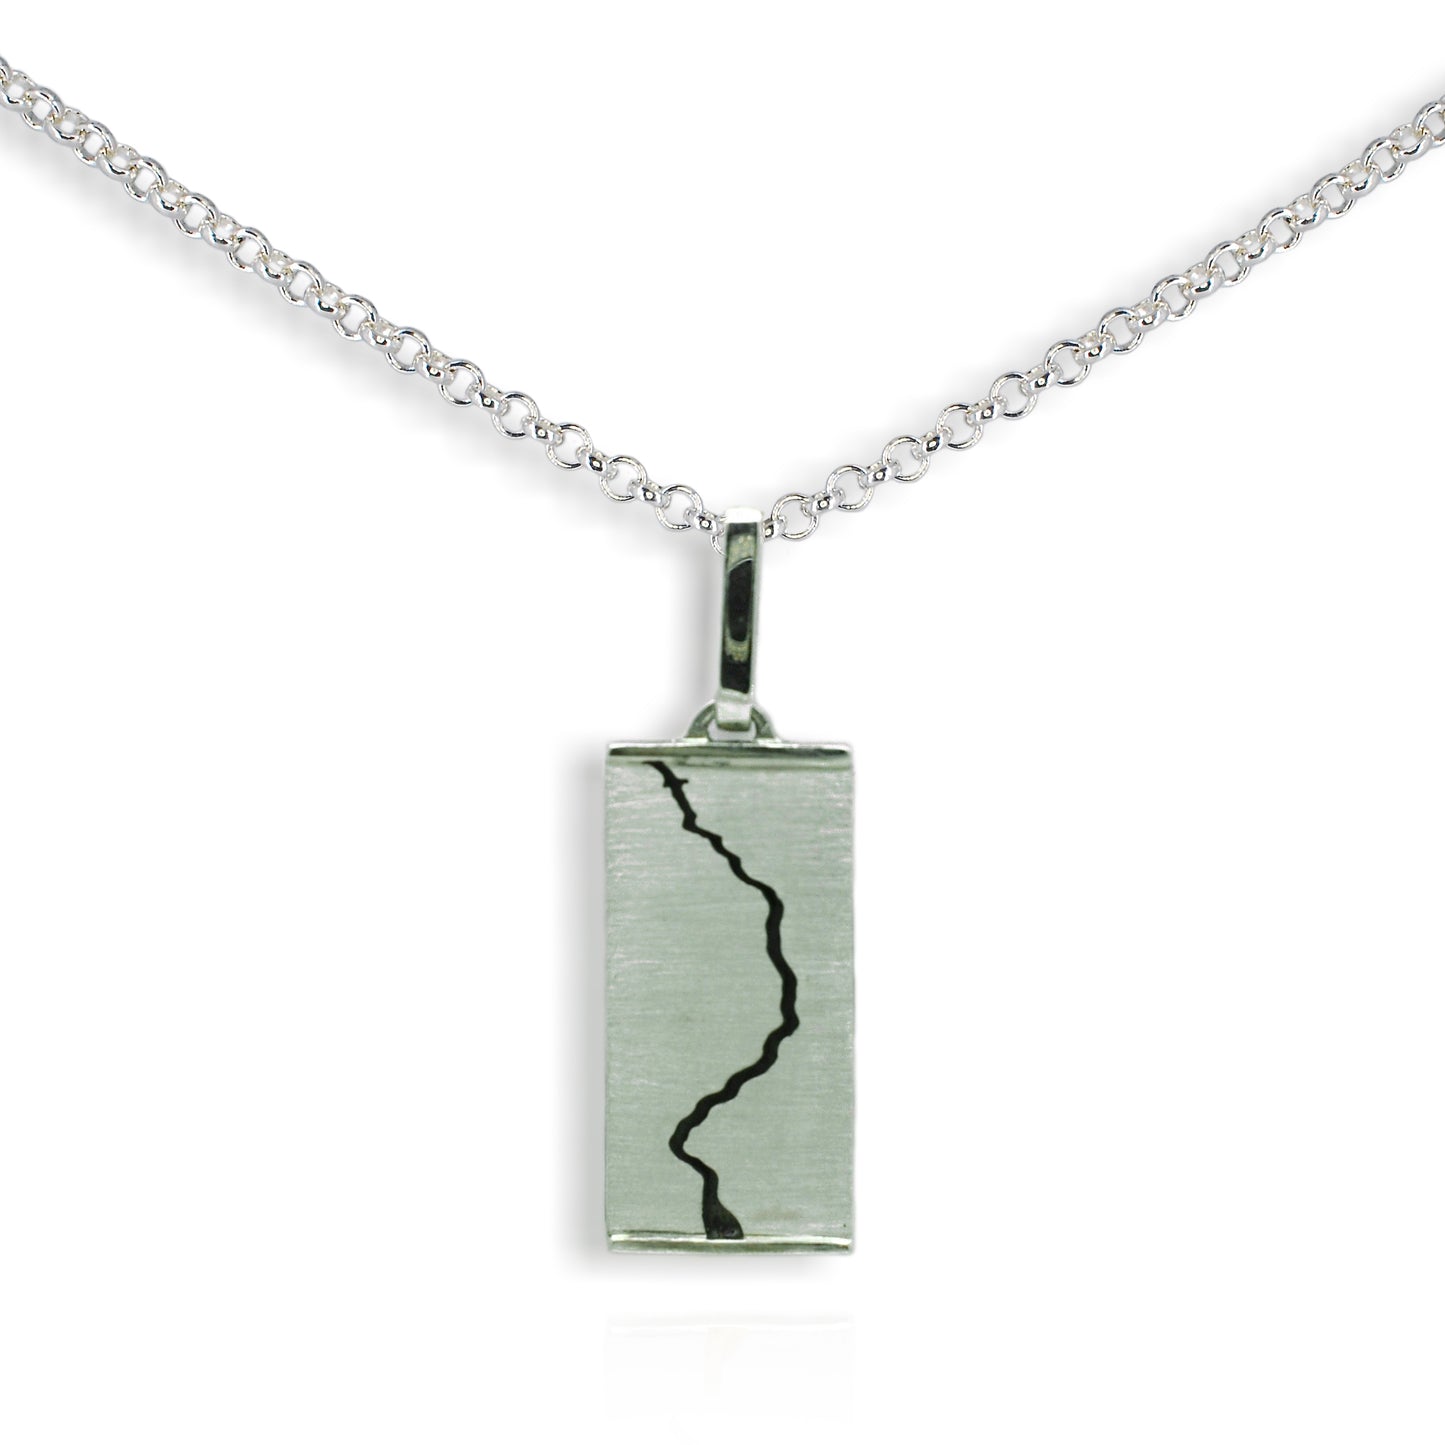 Silver Afon Tywi Pendant